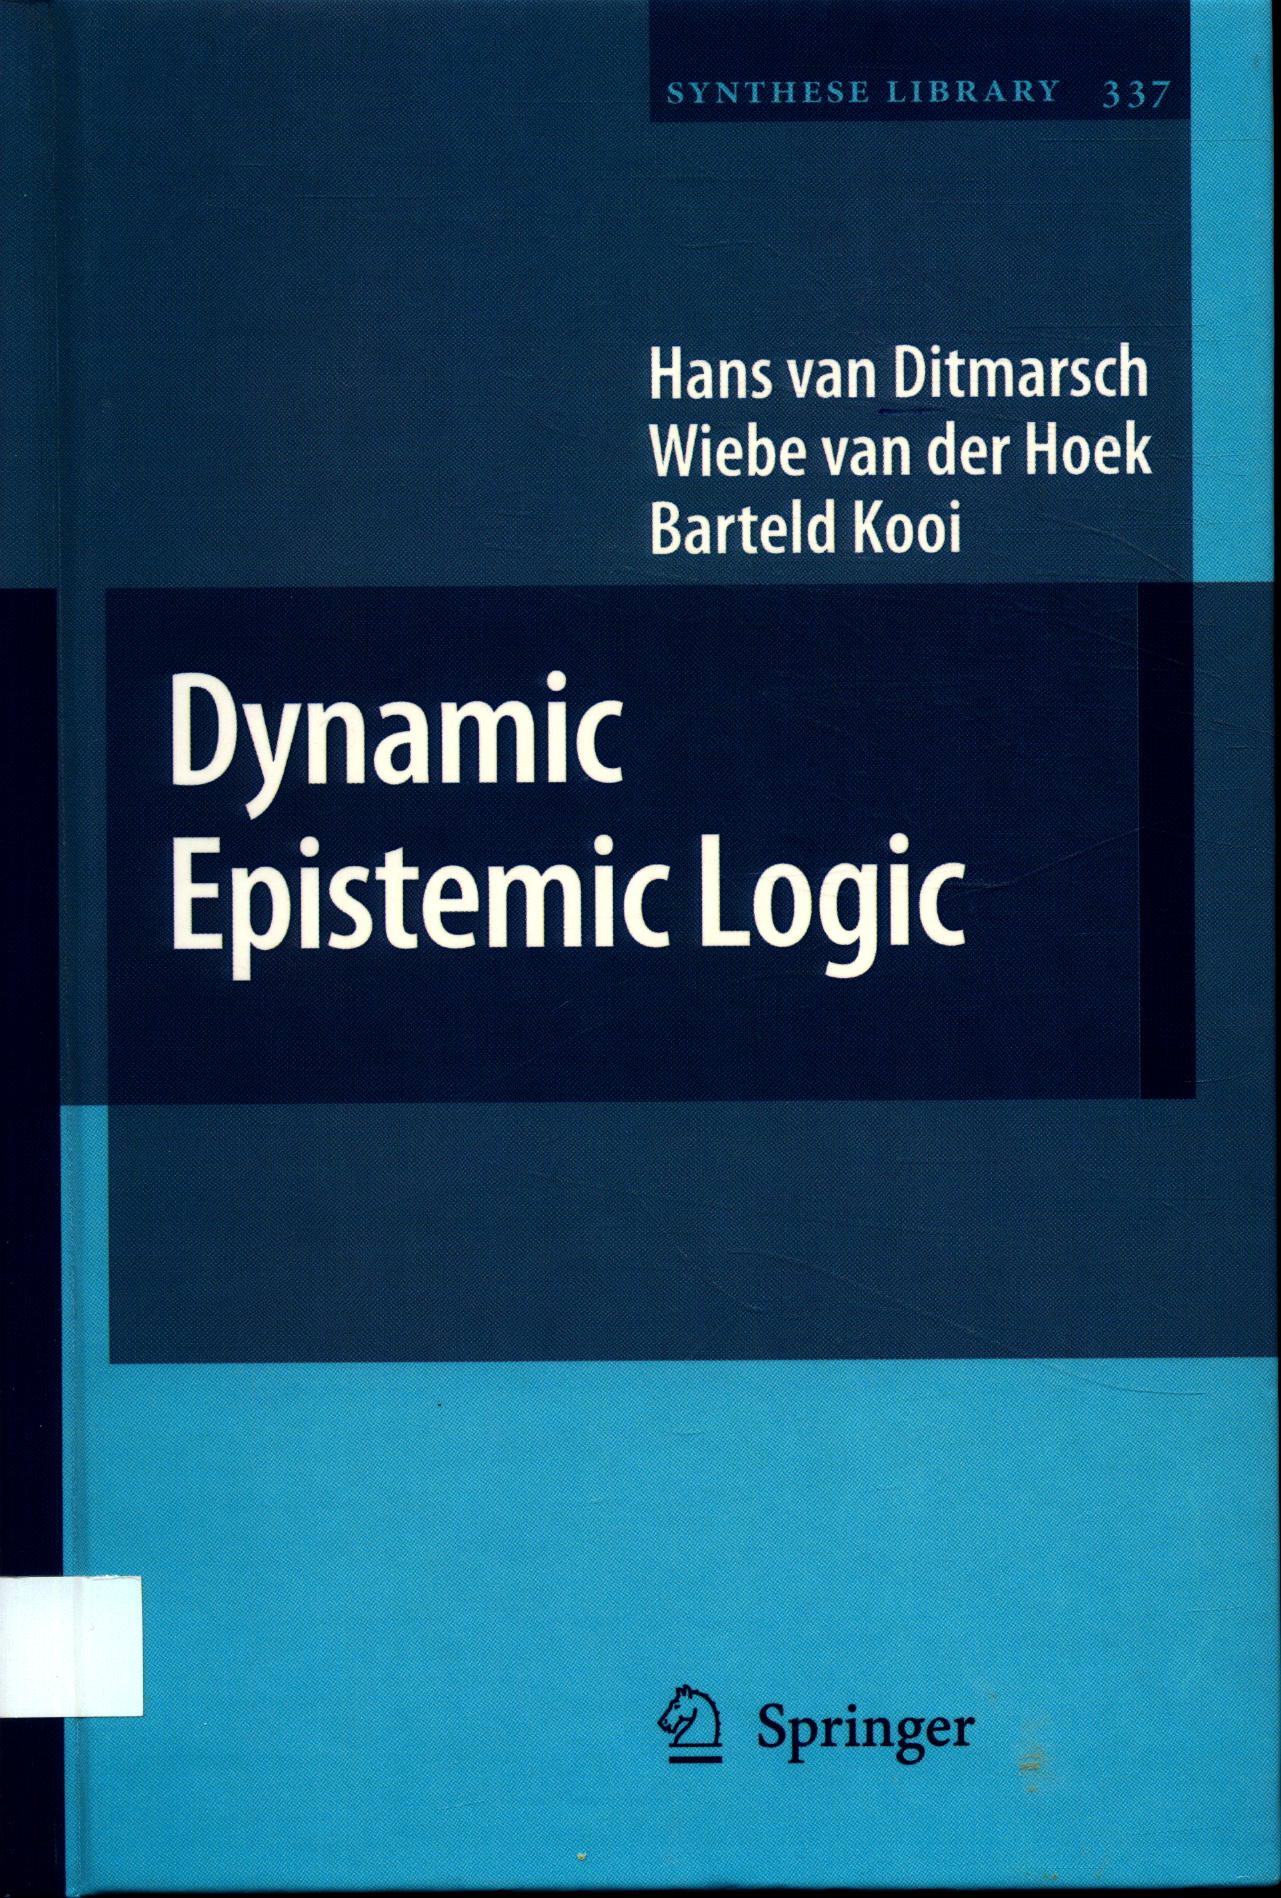 Dynamic Epistemic Logic - van Ditmarsch, Hans, Wiebe van der Hoek und Barteld Kooi